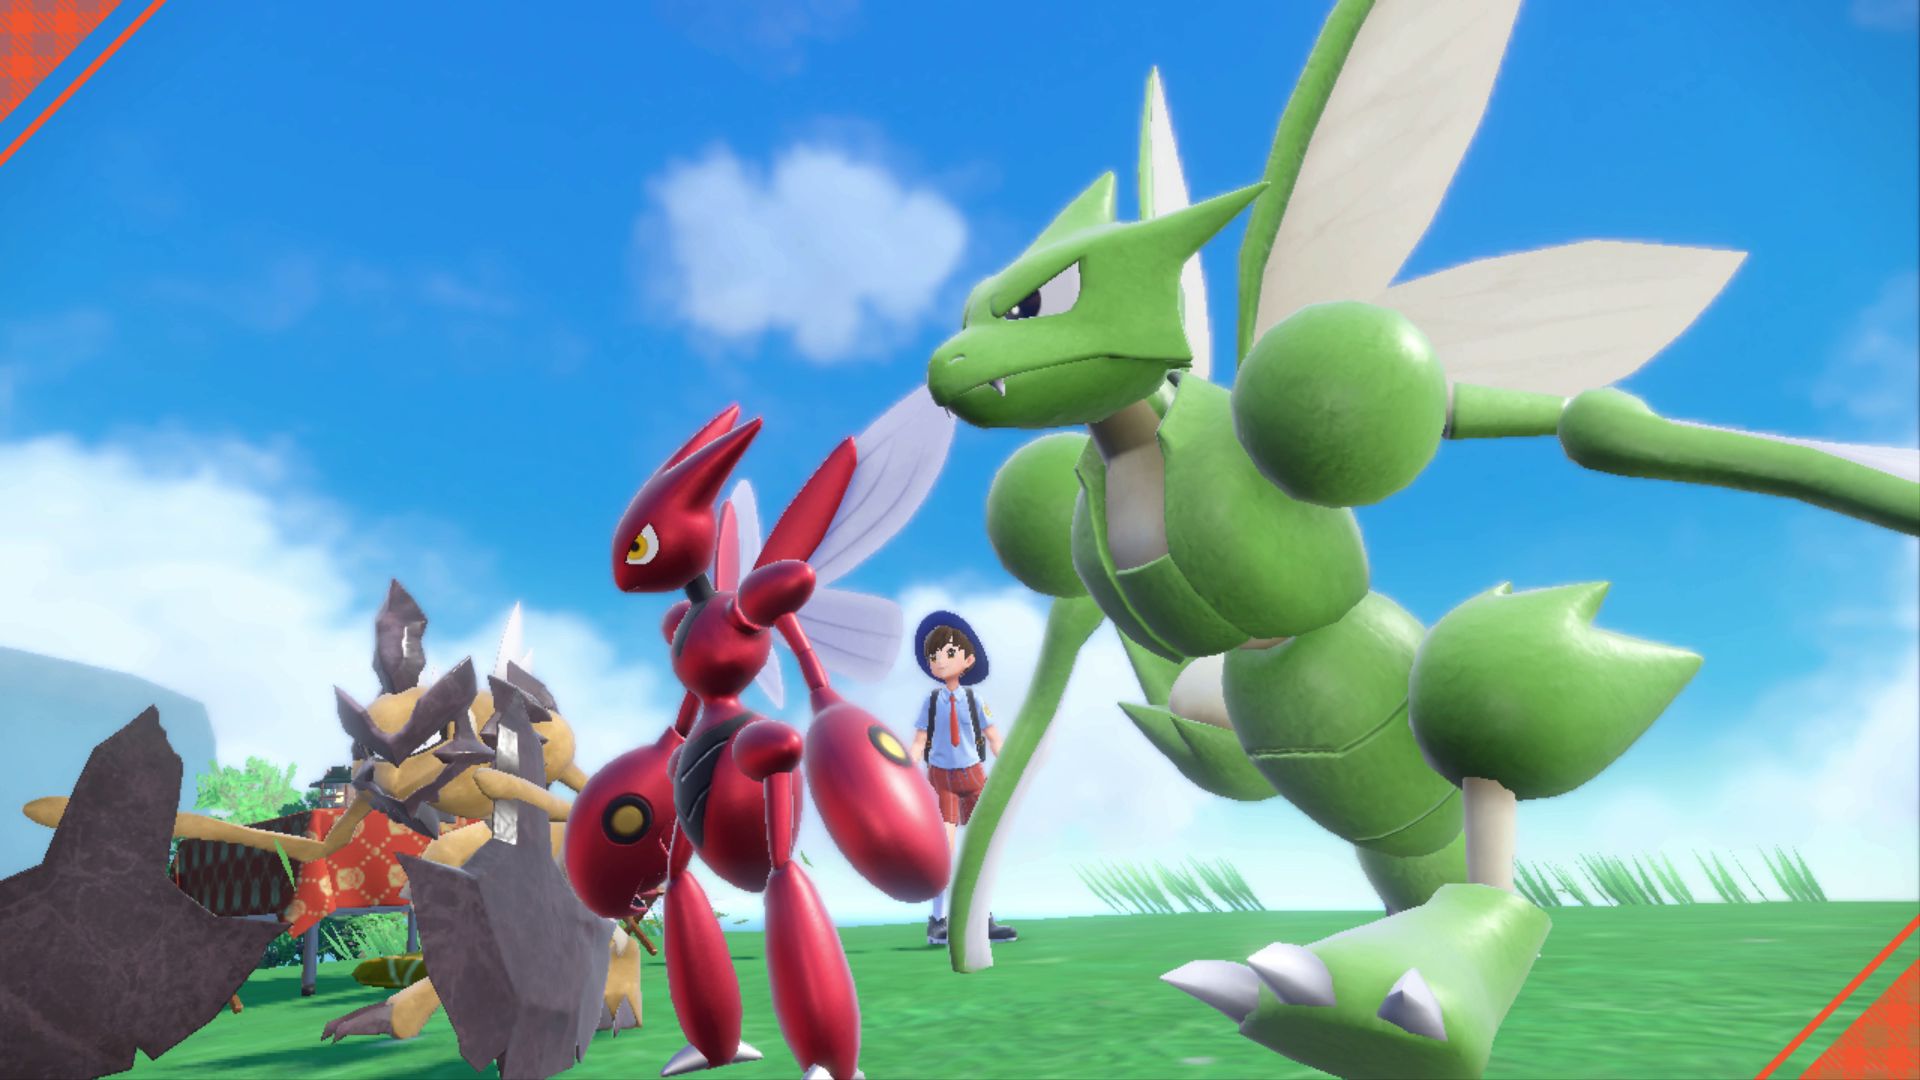 POKÉMON SWORD and SHIELD Reveals 7 New Pokémon (Including